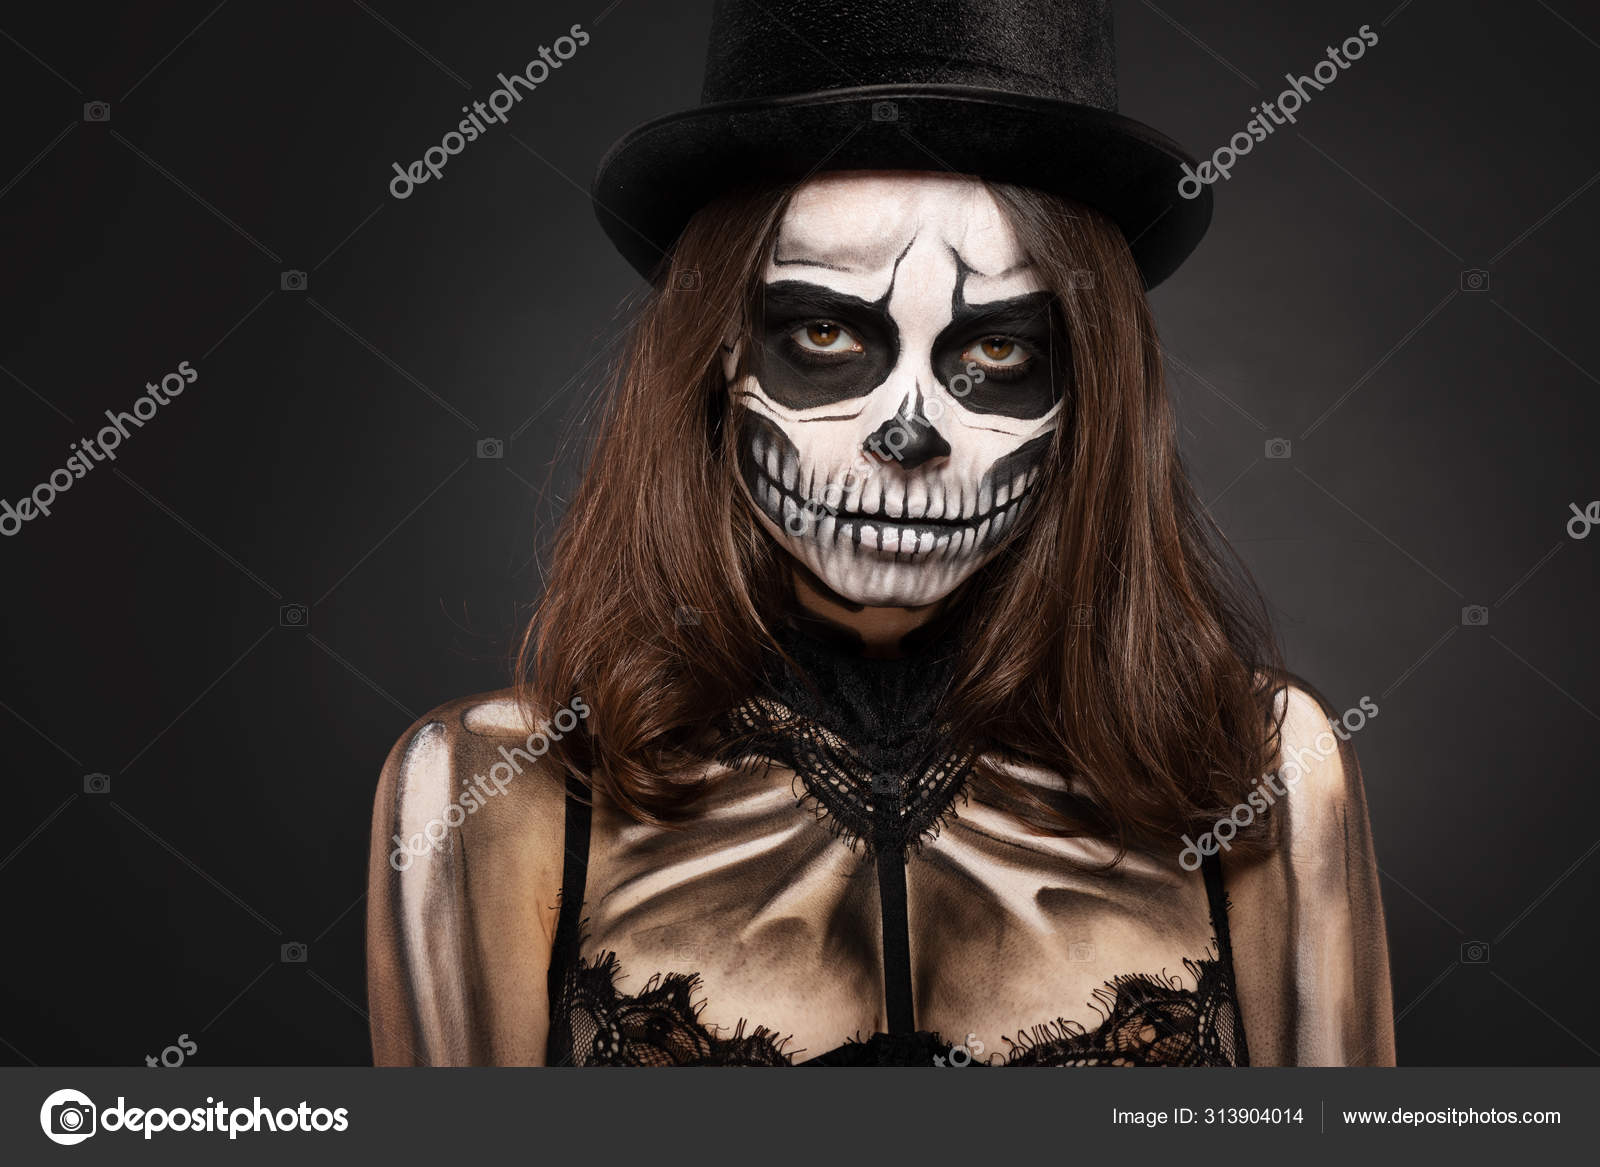 Skull Makeup Girl For Halloween Stock Photo By ©Namiros 313904014